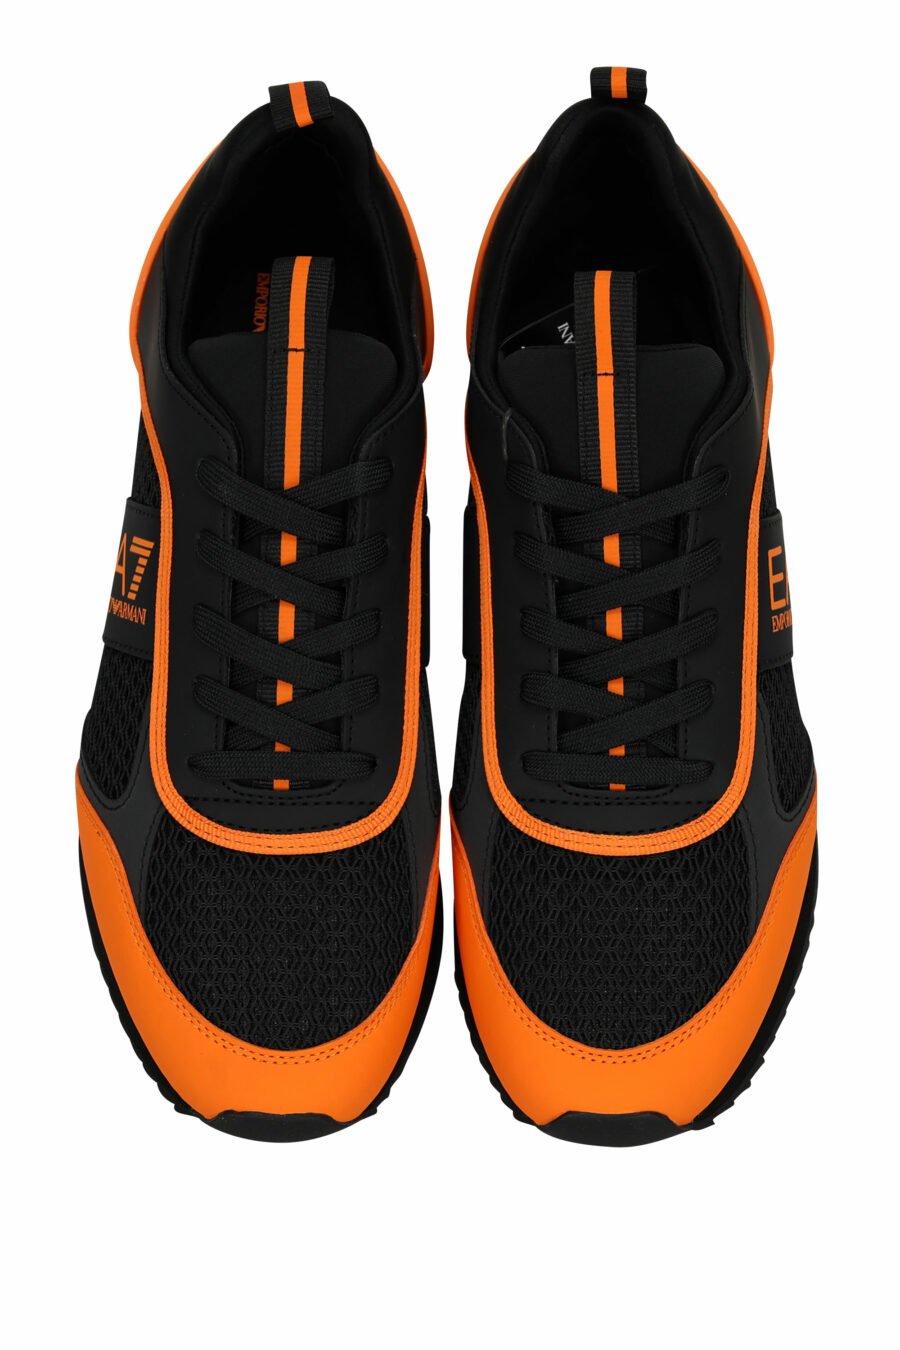 Zapatillas negras con logo "lux identity" naranja - 8057970798149 4